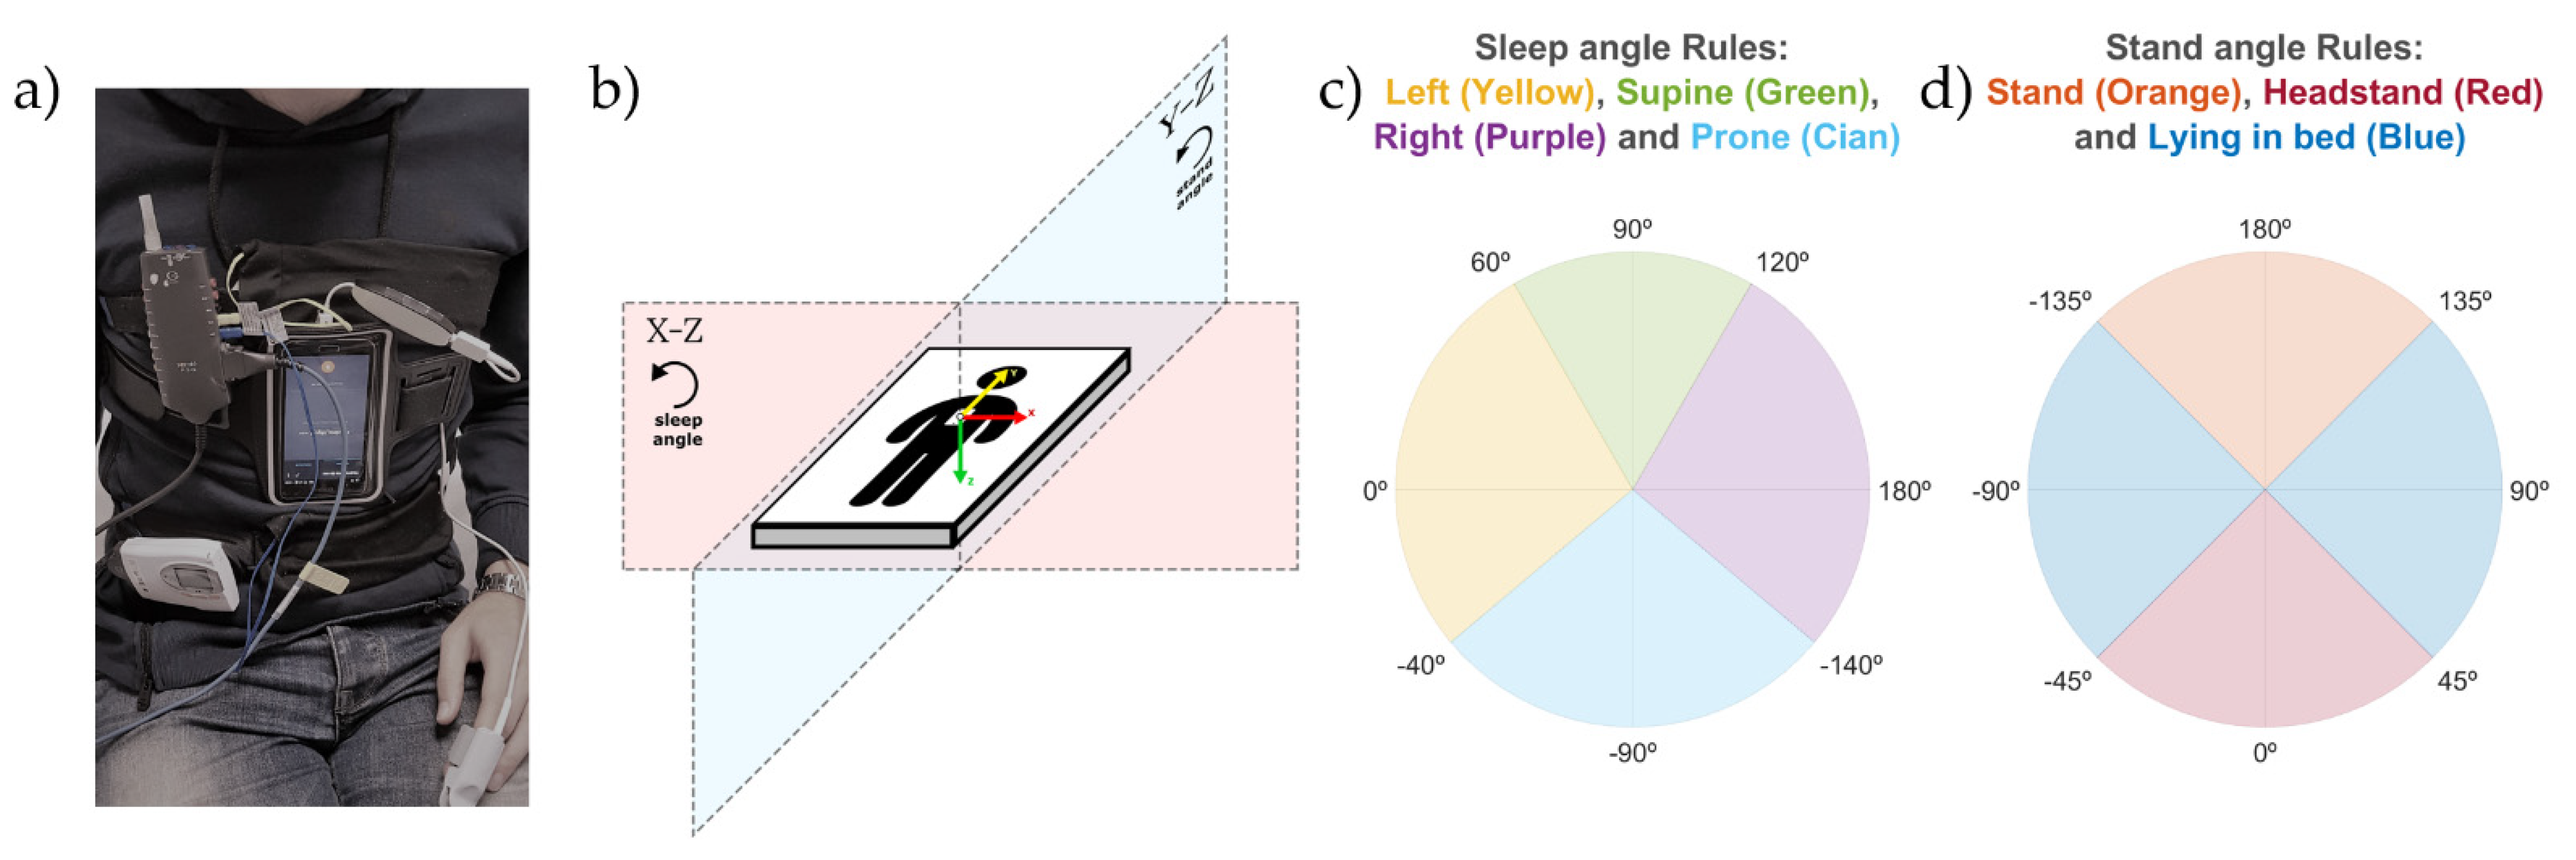 Sensors | Free Full-Text | Enhanced Monitoring of Sleep Position